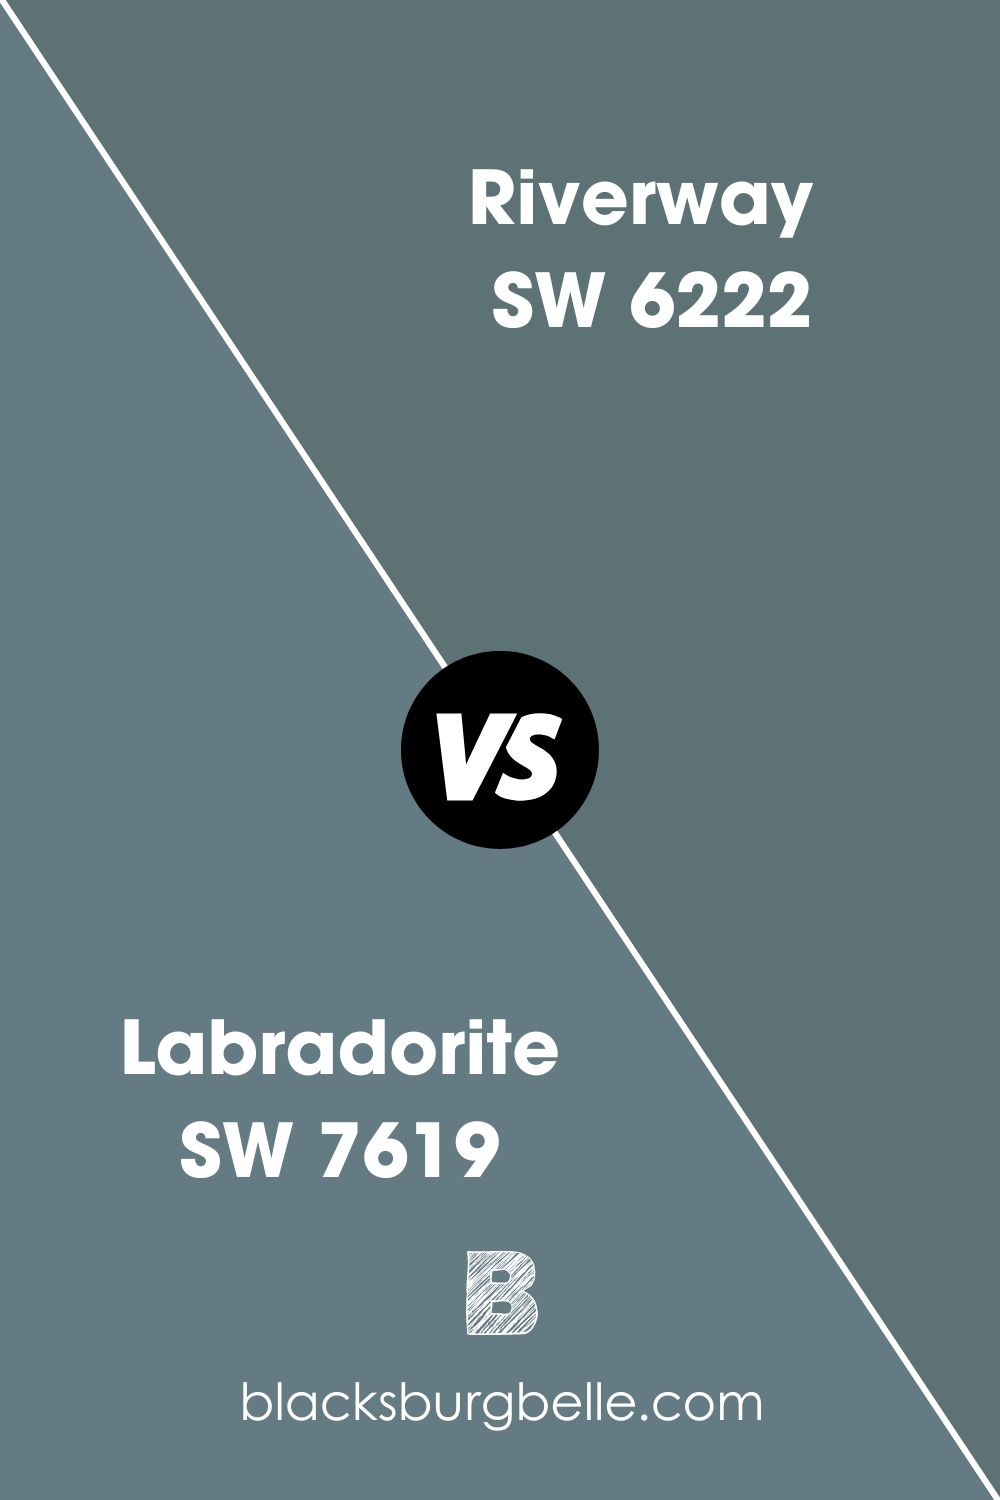 SW Labradorite 7619 